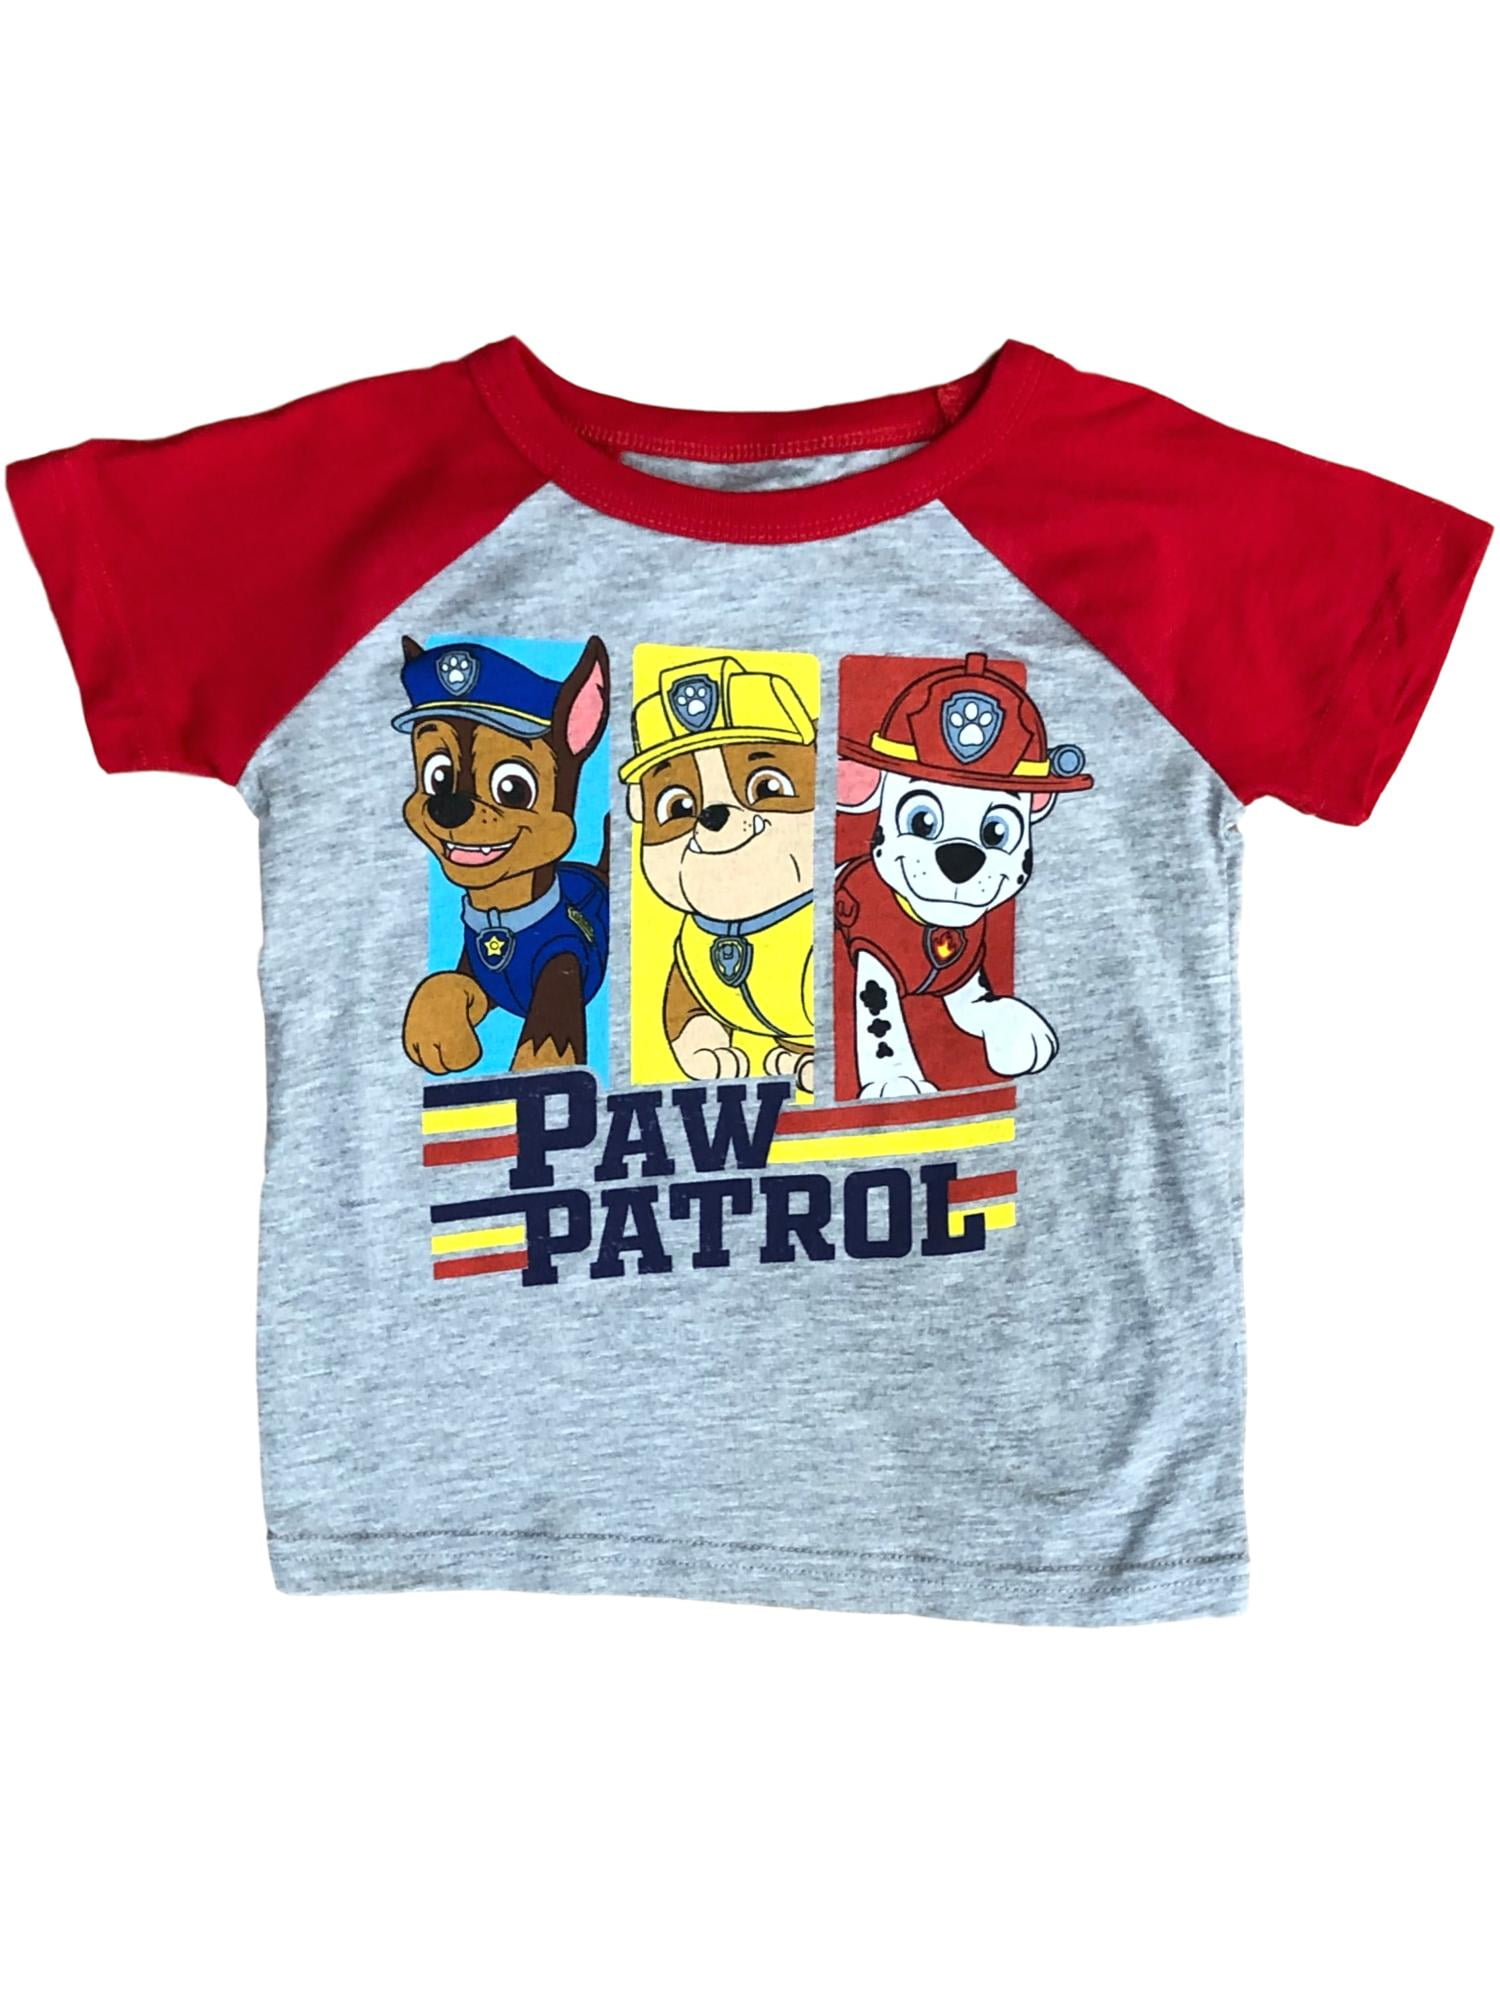 Nickelodeon Paw Patrol Short Sleeve T Shirt Boy Size 5T